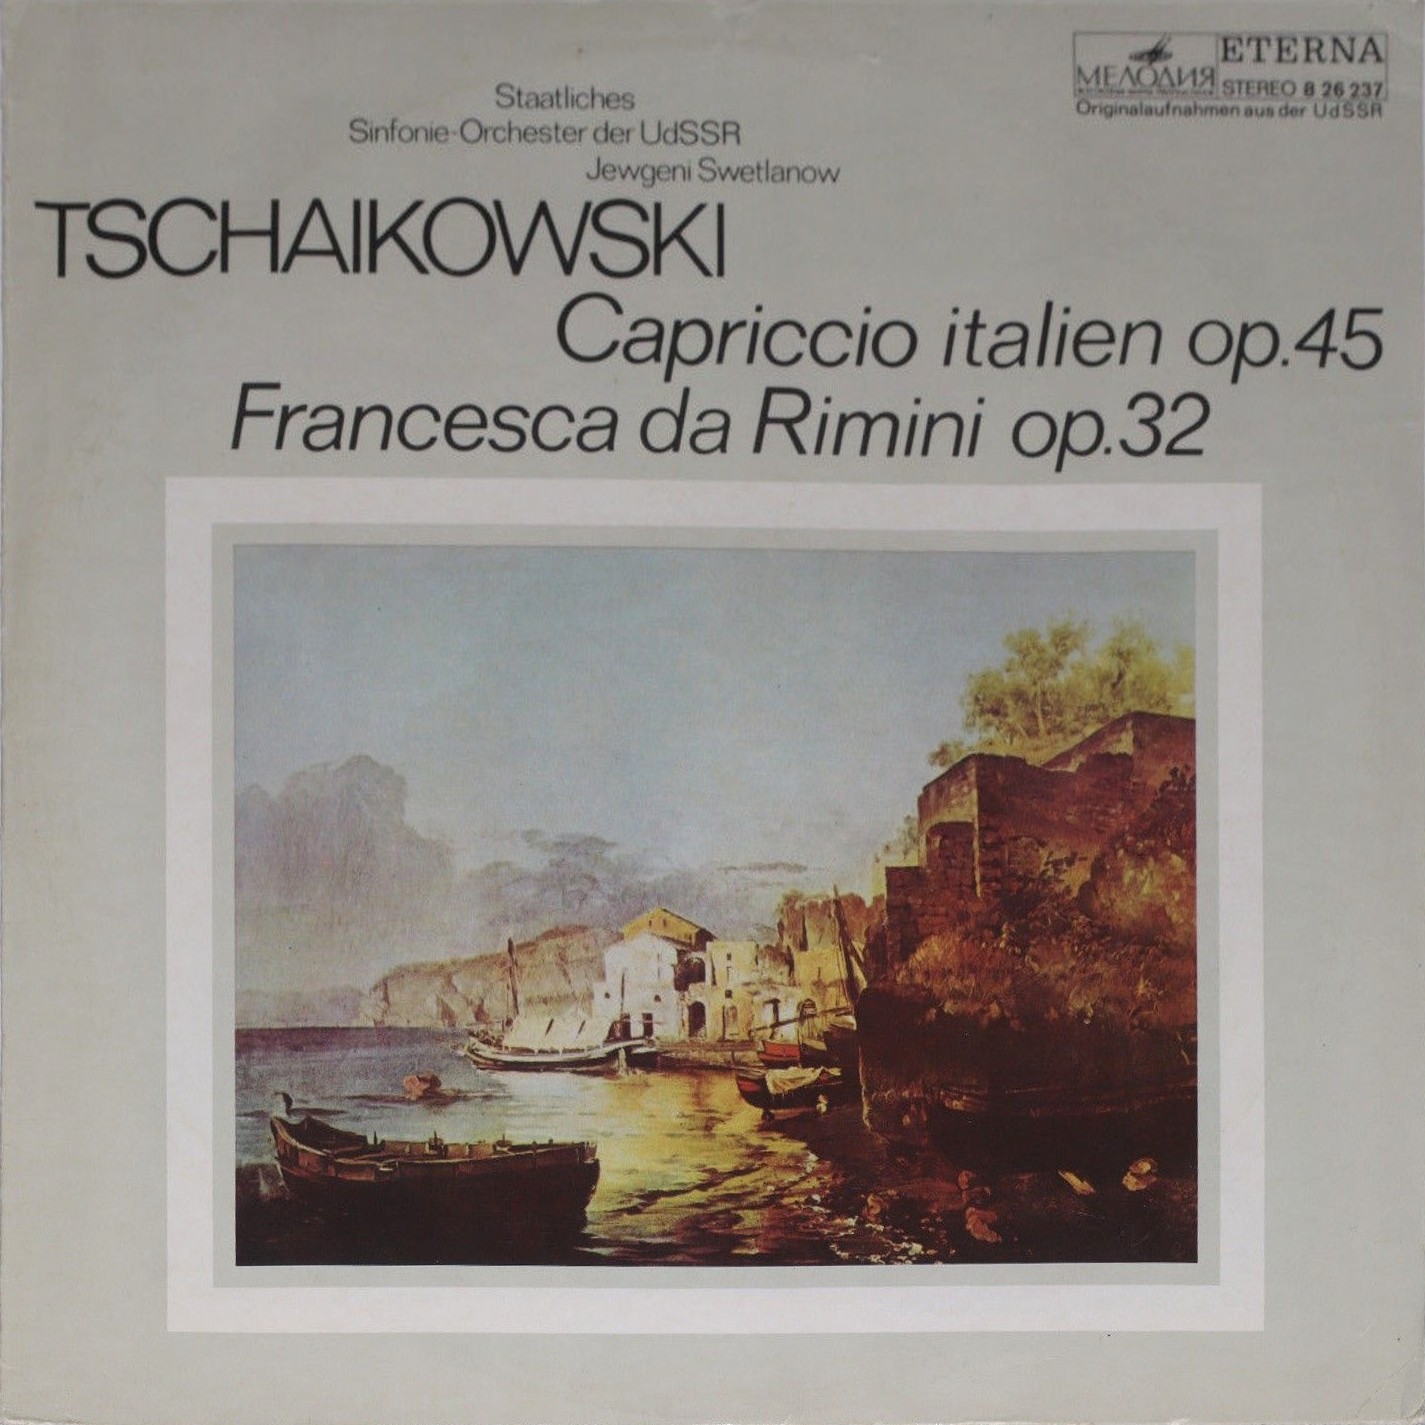 Peter I. Tschaikowski. Capriccio italien op.45 - Francesca da Rimini op.32 [по заказу немецкой фирмы ETERNA 8 26 237]